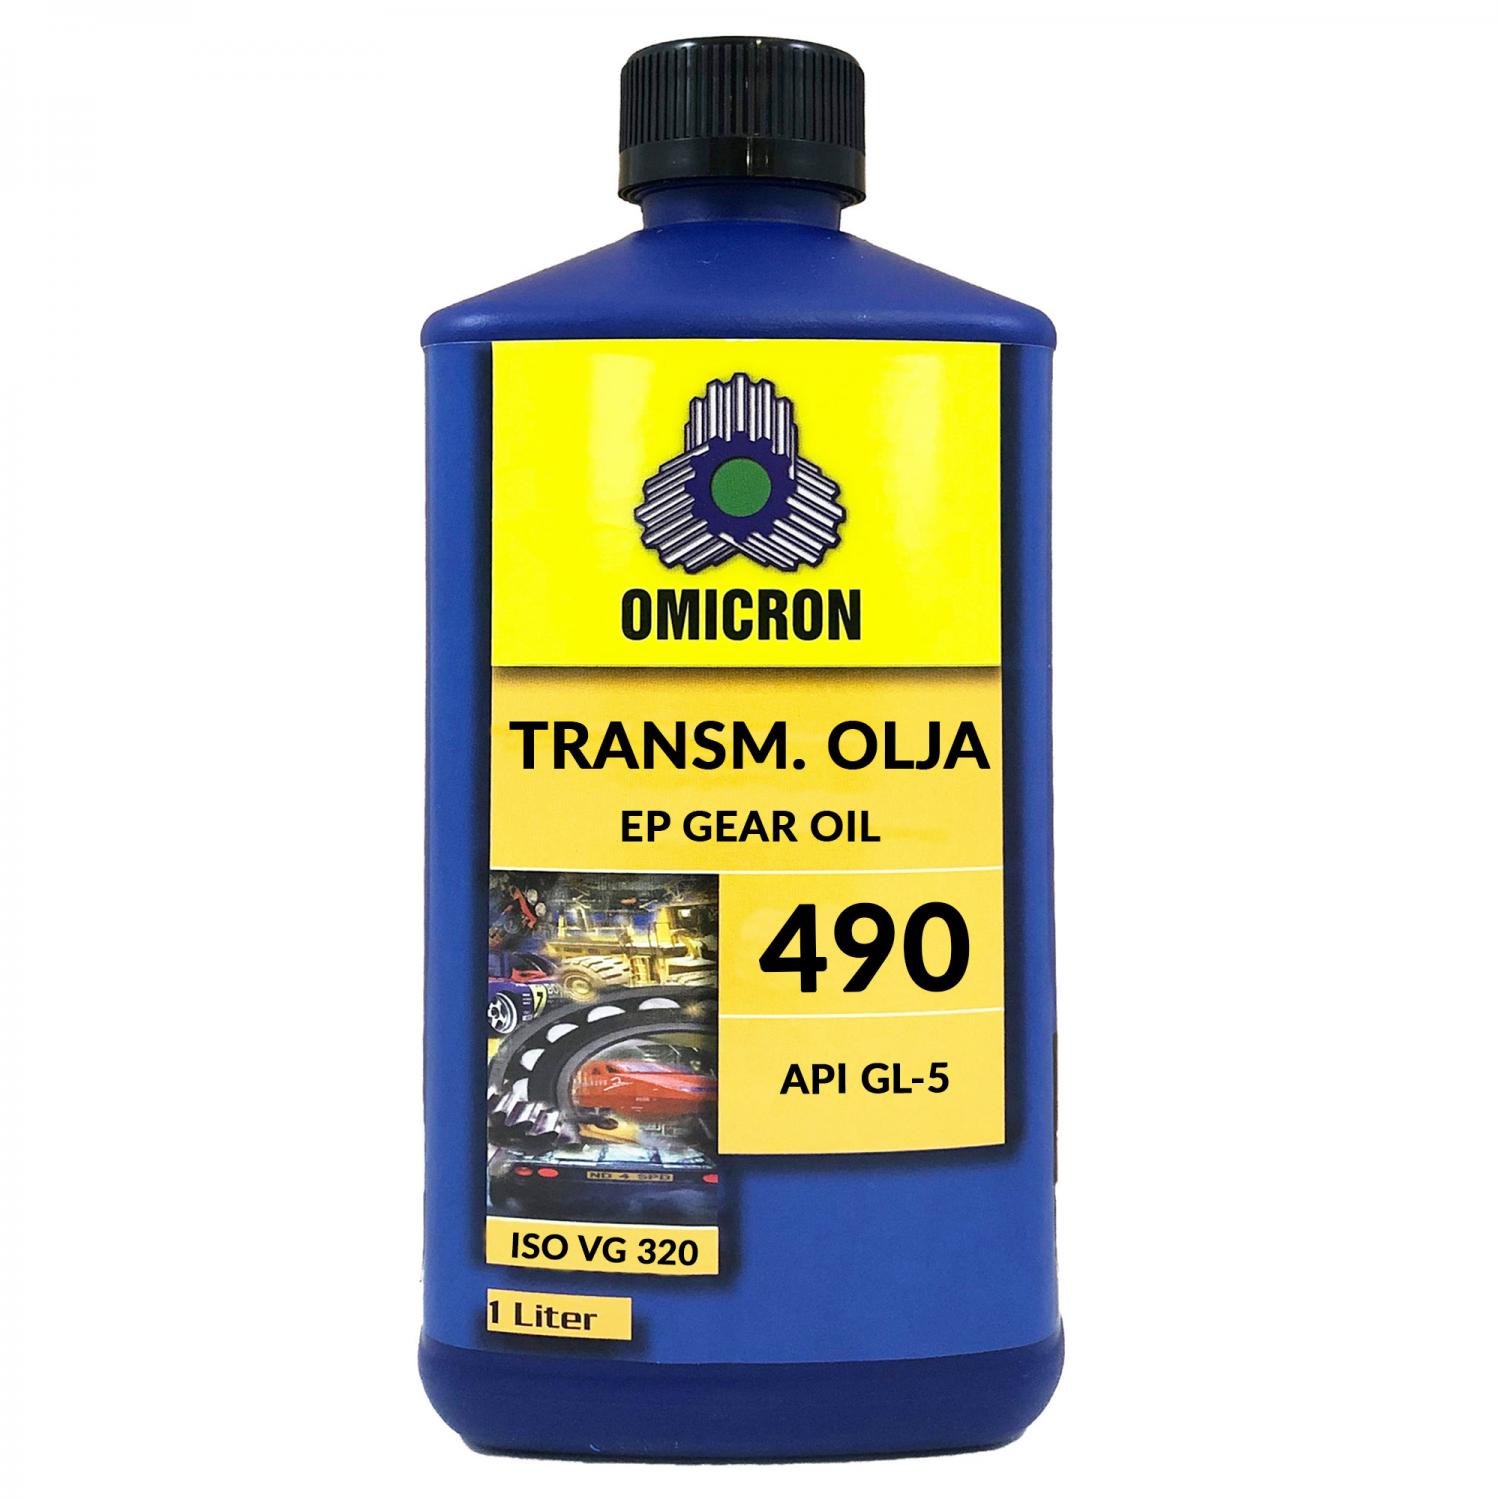 Omicron 490 ISO VG 320 Transmissionsolja API GL...